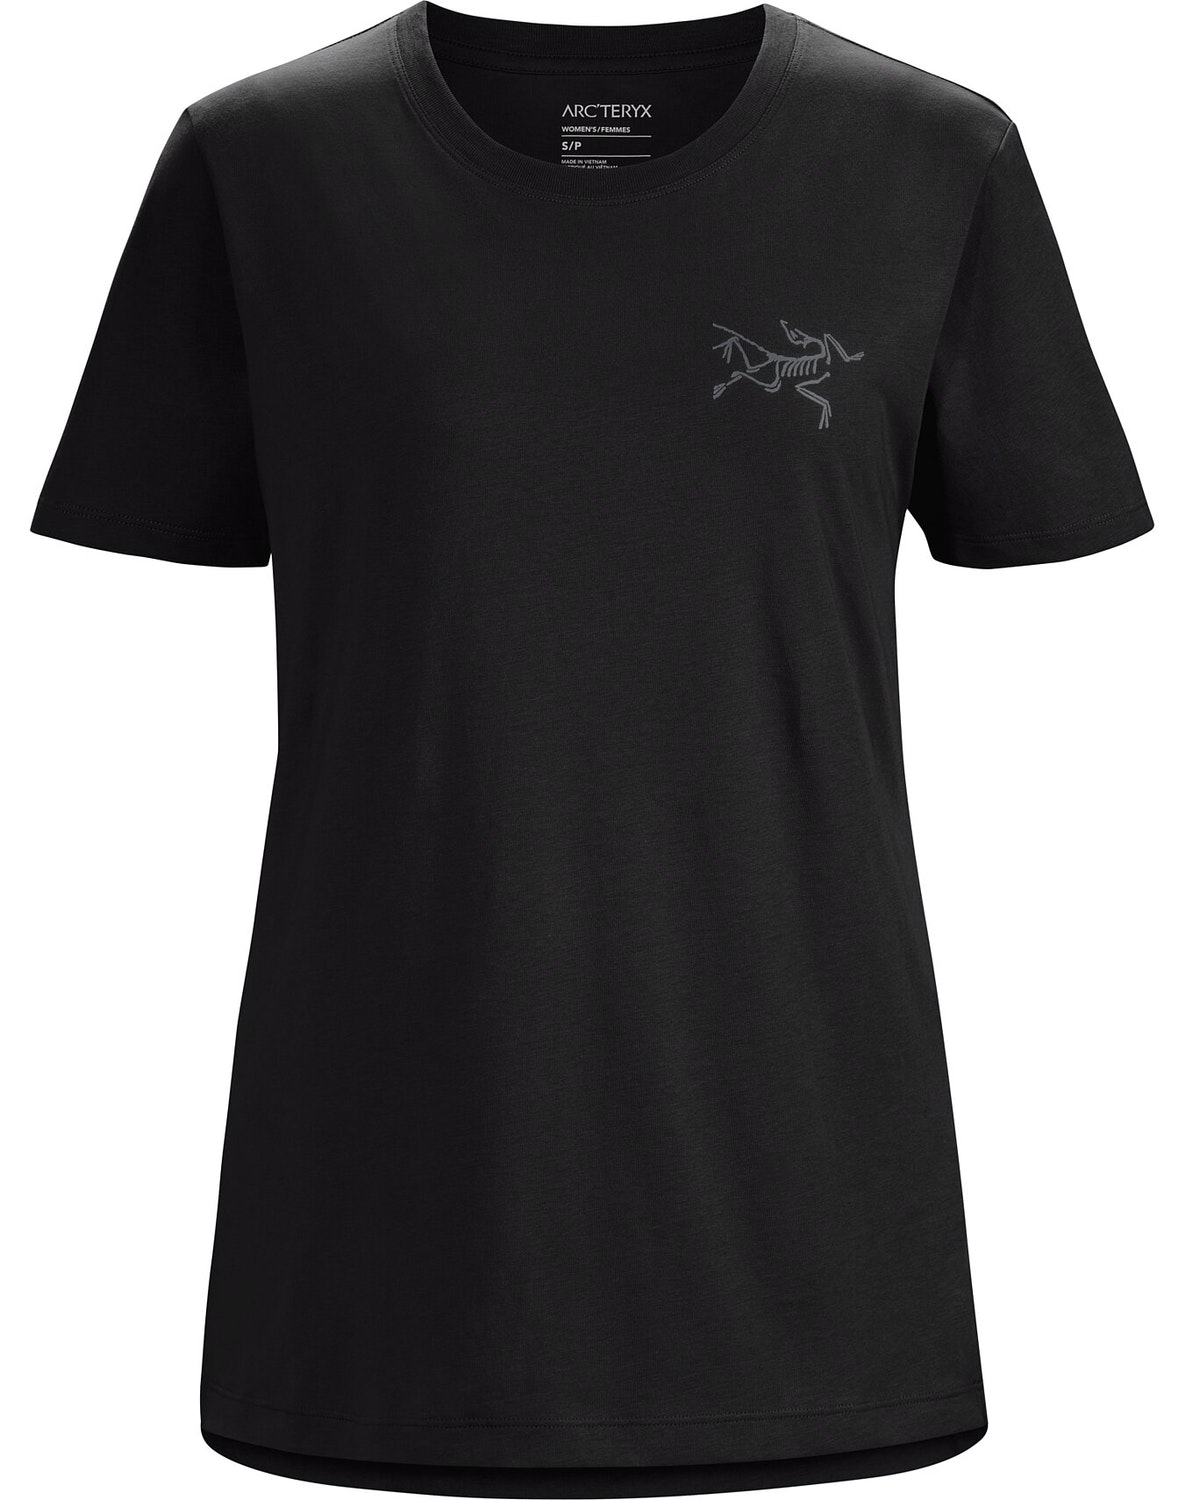 T-shirt Arc'teryx Bird Emblem Donna Nere - IT-5767943